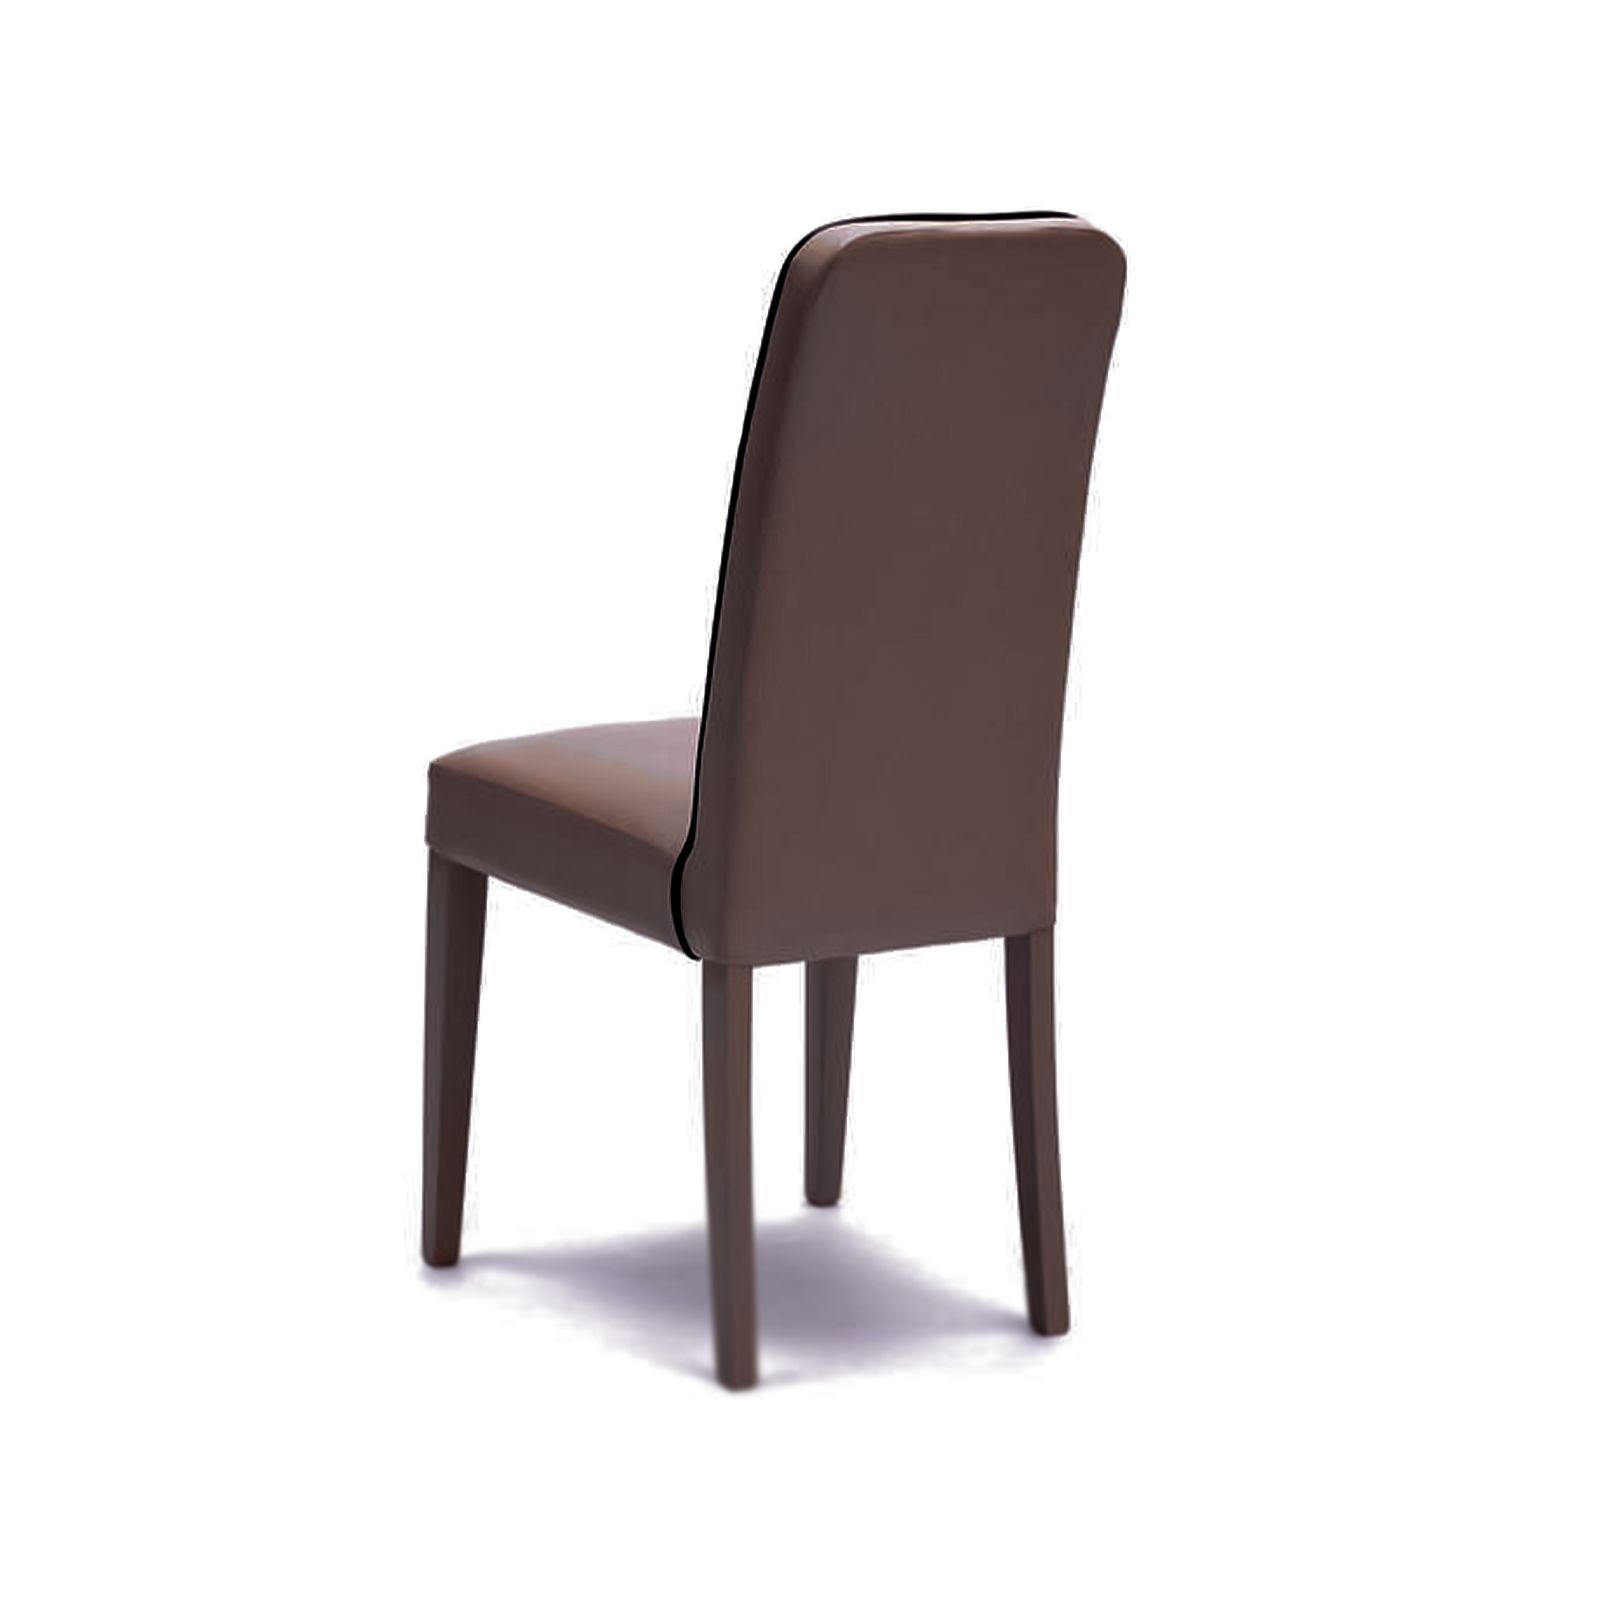 Set di sedie imbottite da soggiorno "Gardenia" moderne in similpelle cm 46x59 99h